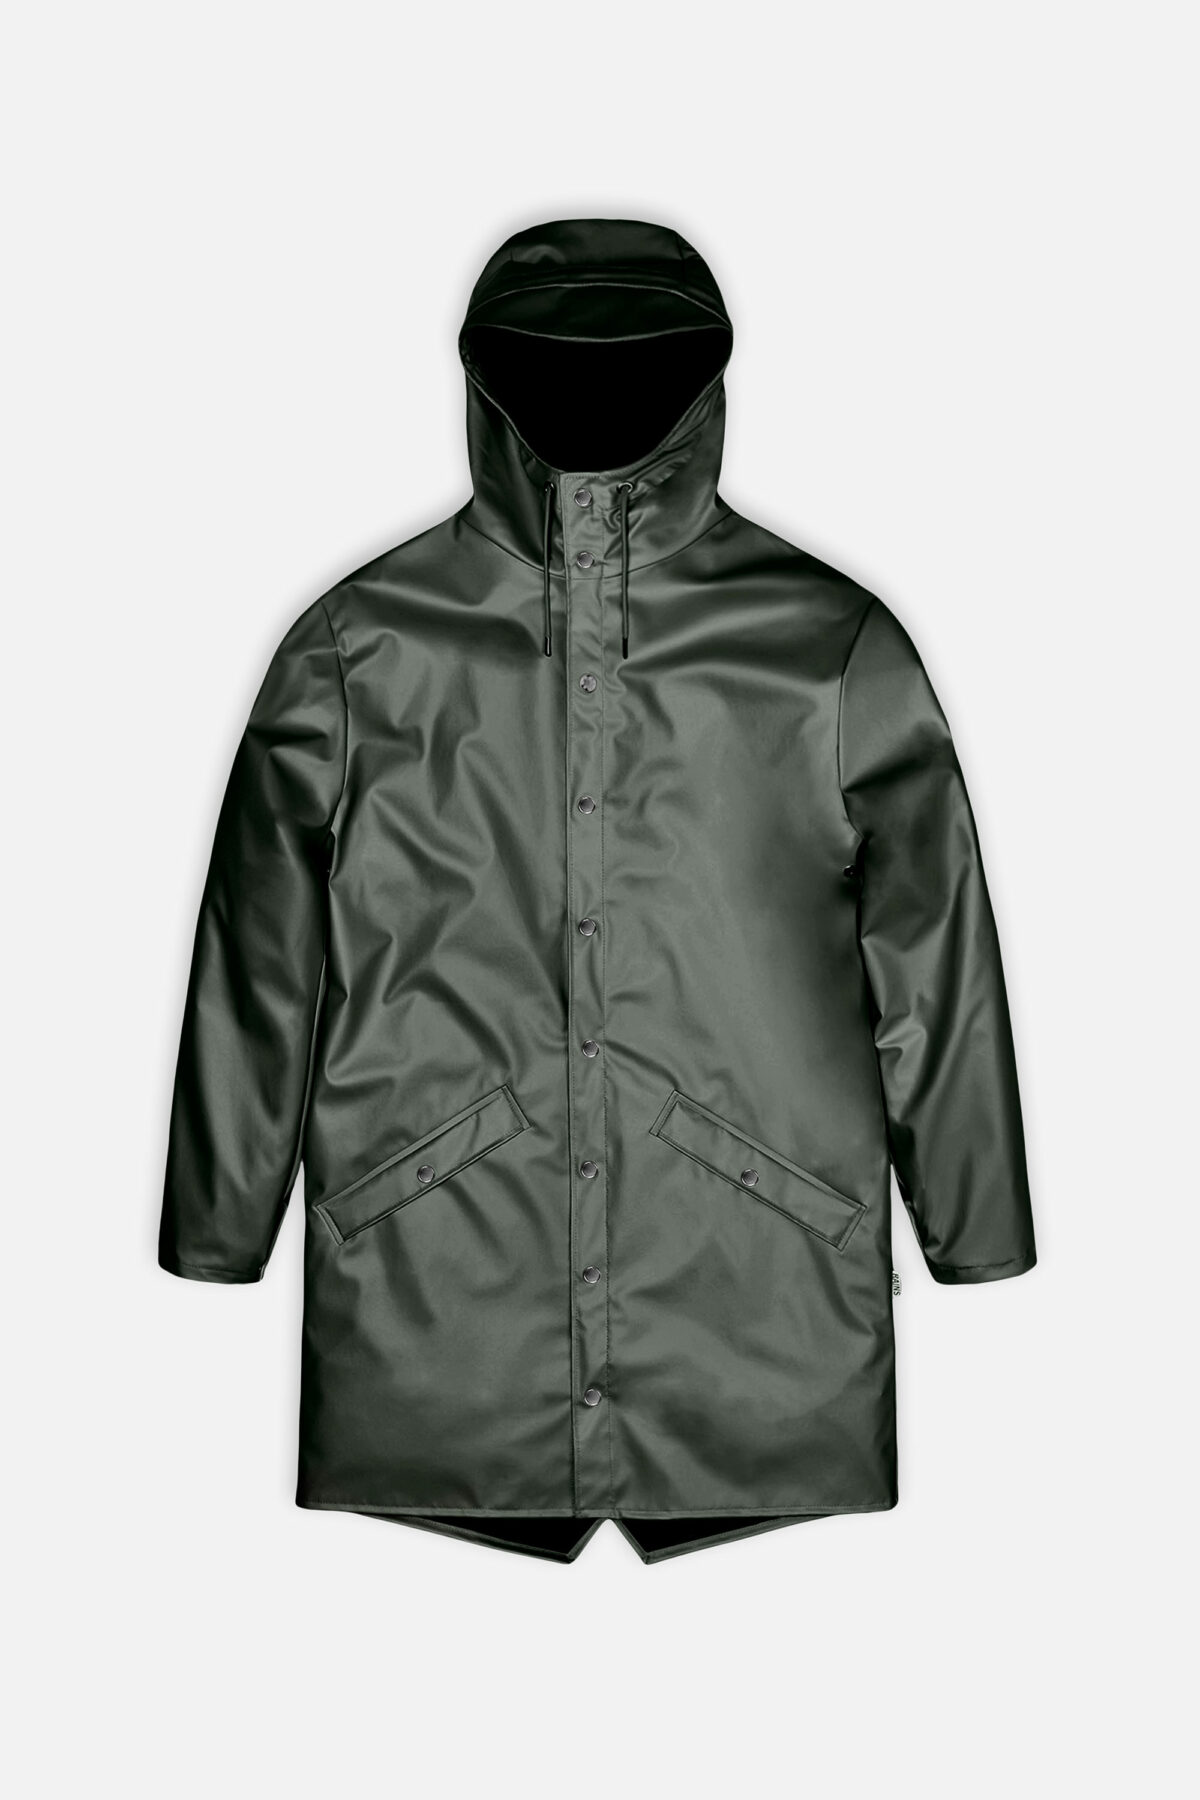 12020-long-jacket-silver-pine-raincoat-matchboxathens